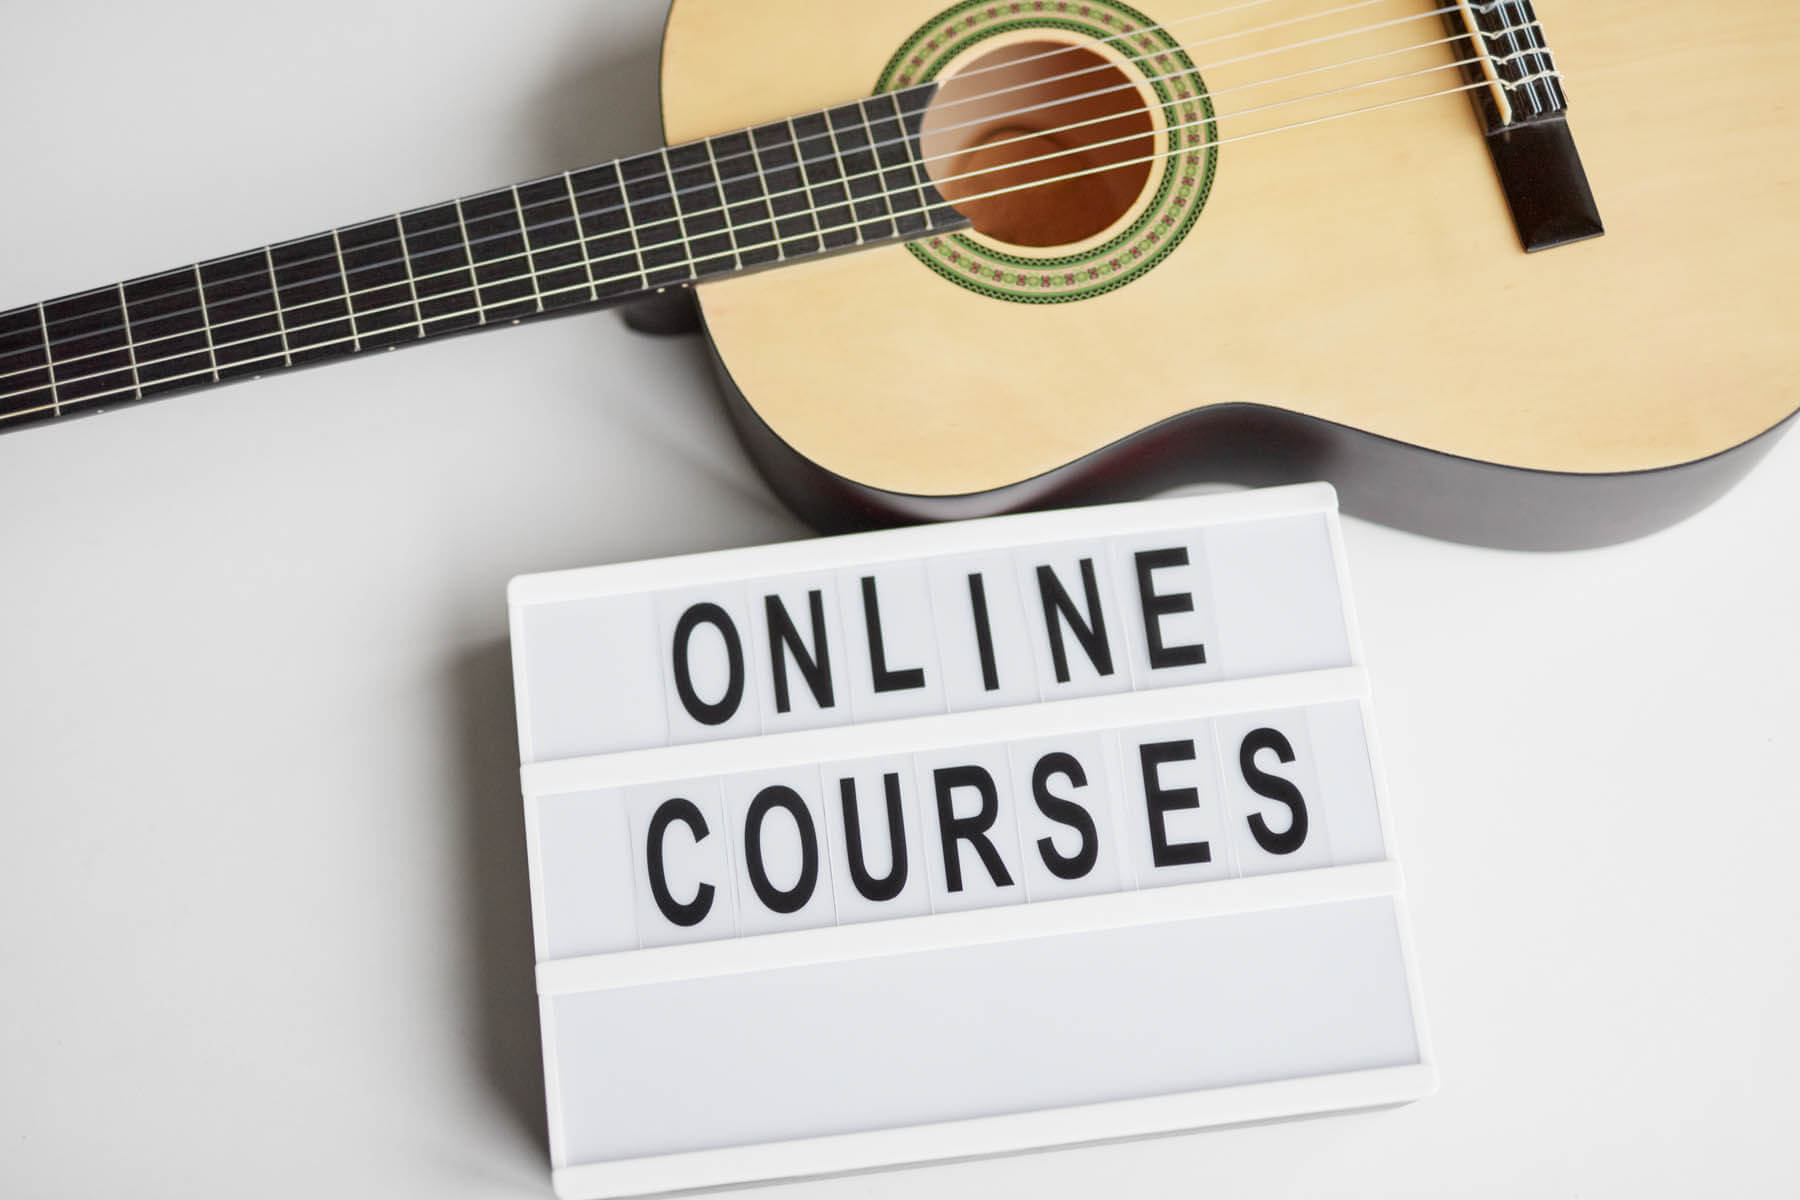 acoustic-guitar-for-online-courses-2022-11-11-05-25-15-utc.jpg